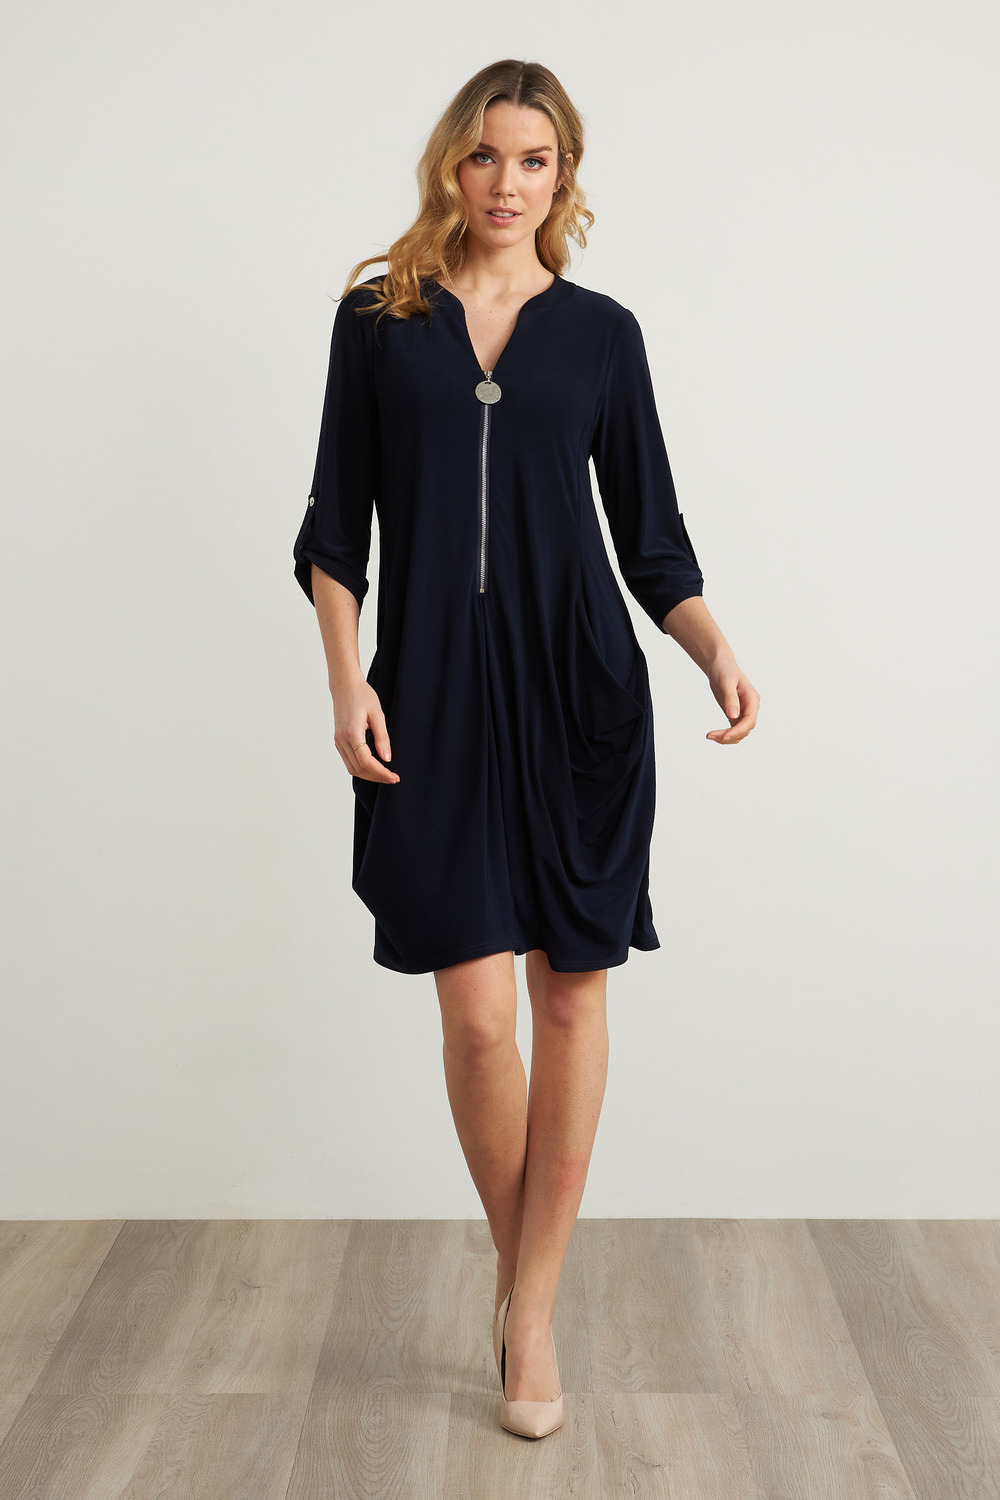 Joseph Ribkoff Zip Front Dress Style 211238. Midnight Blue